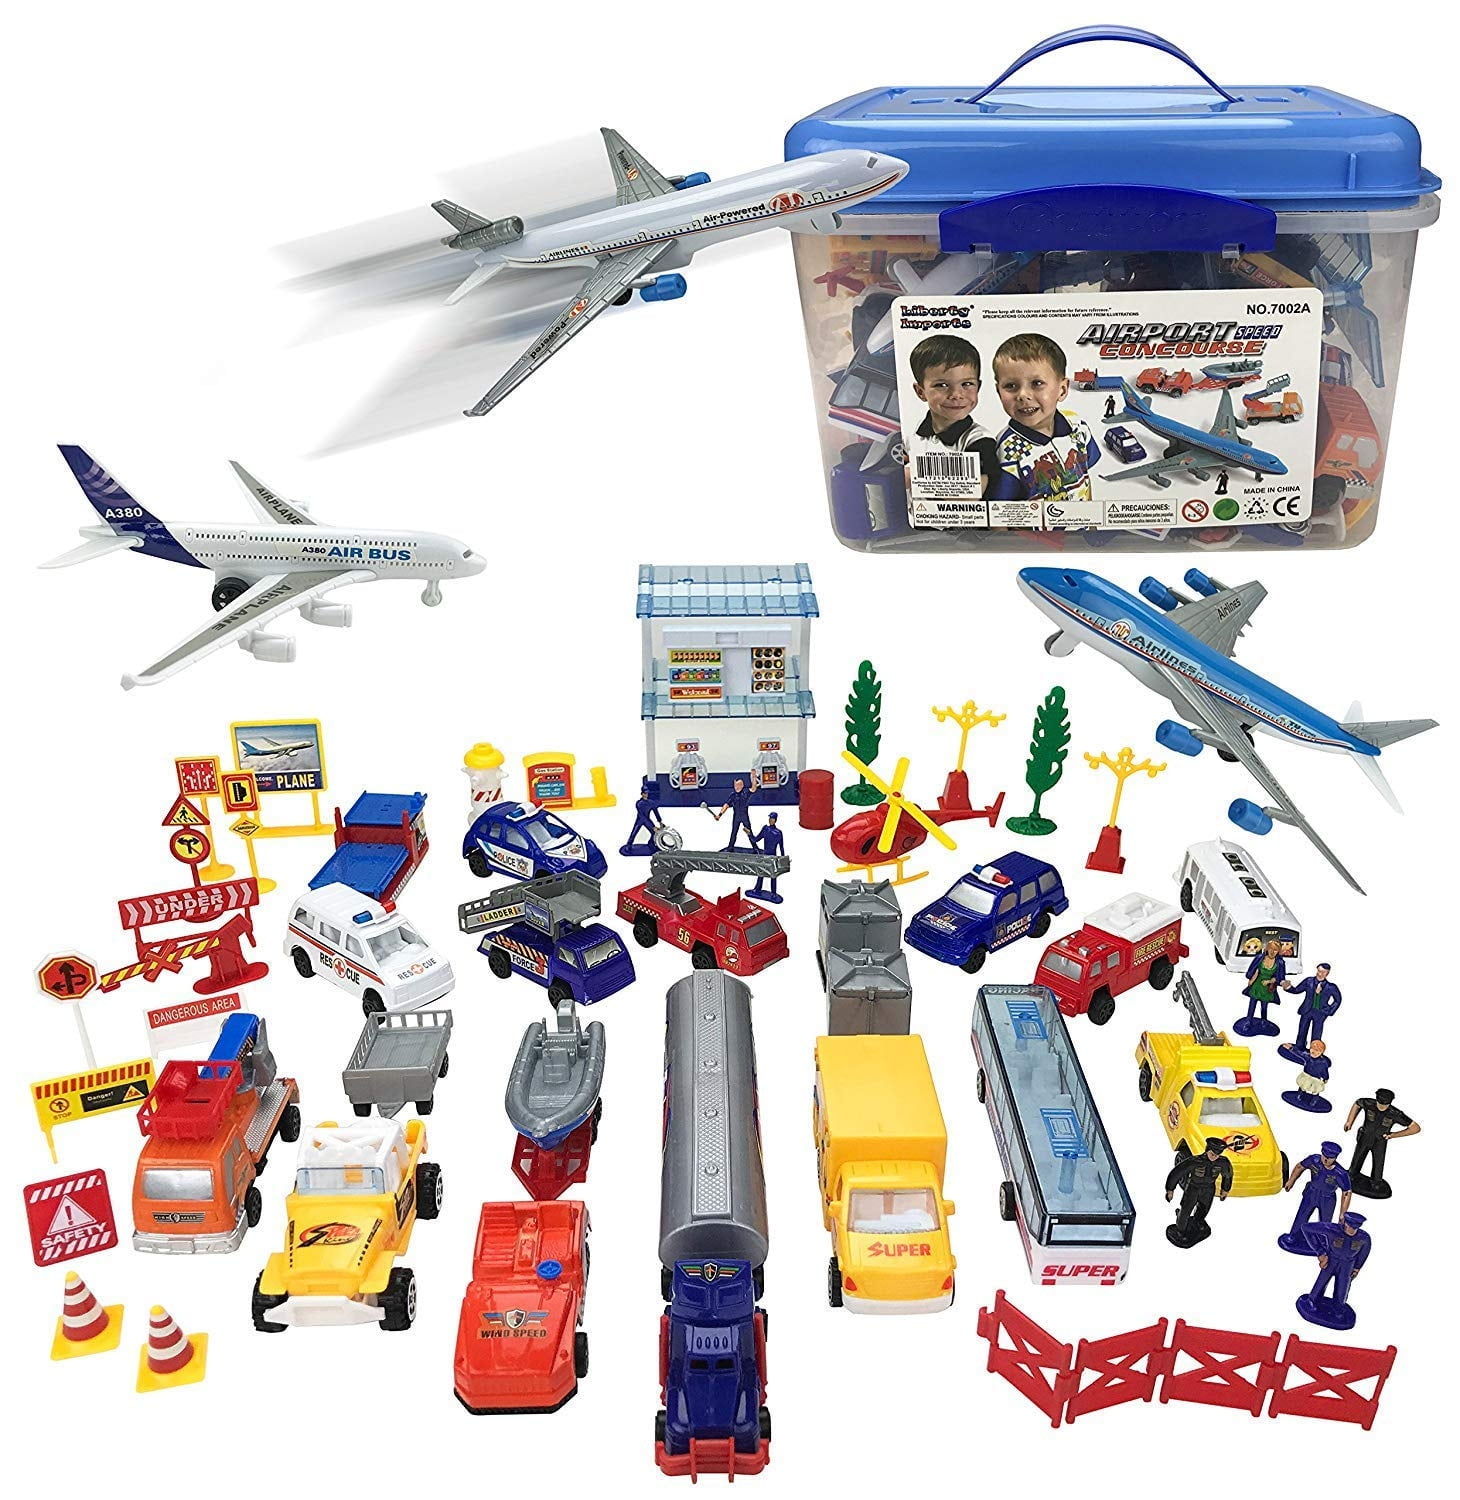  Daron Westjet Airport Playset : Toys & Games